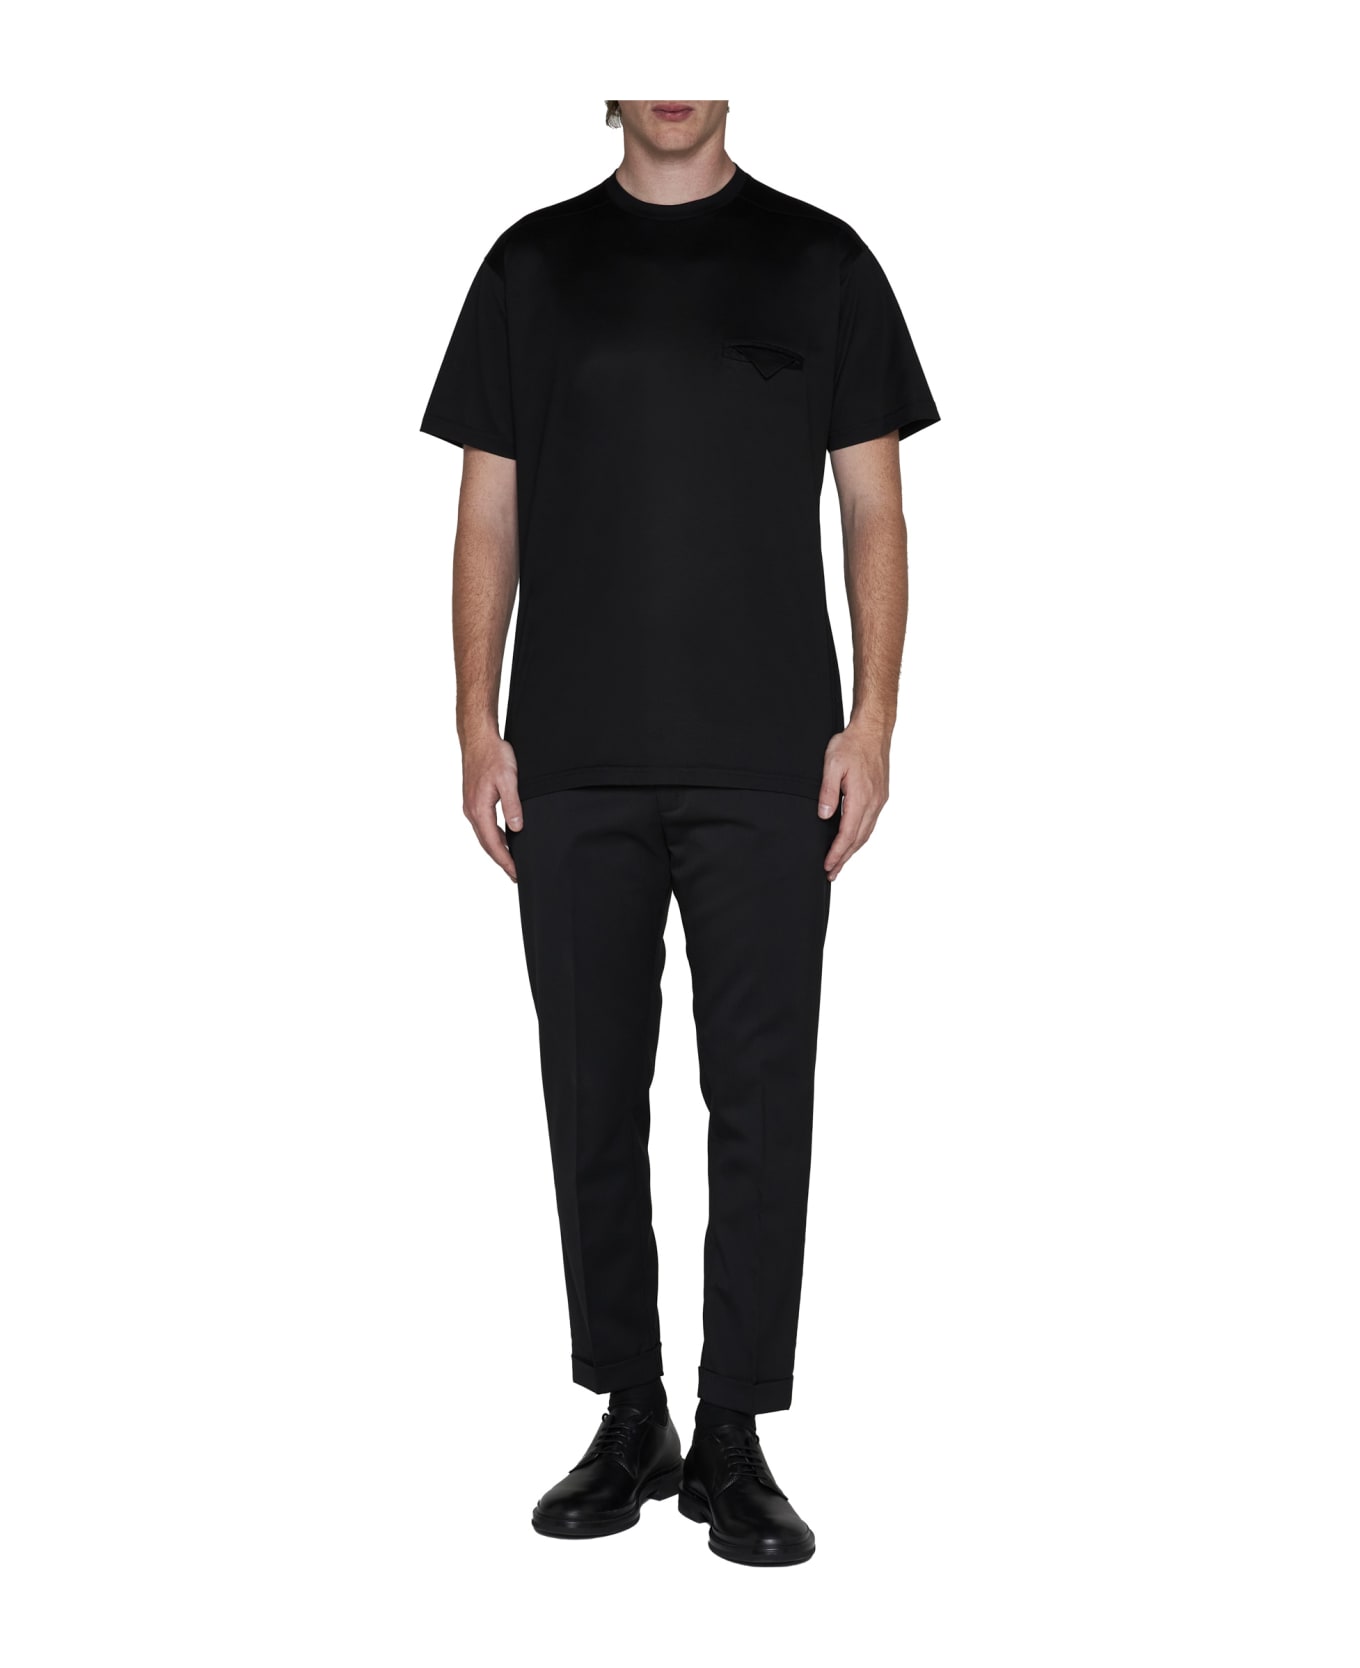 Low Brand T-Shirt - Jet black シャツ